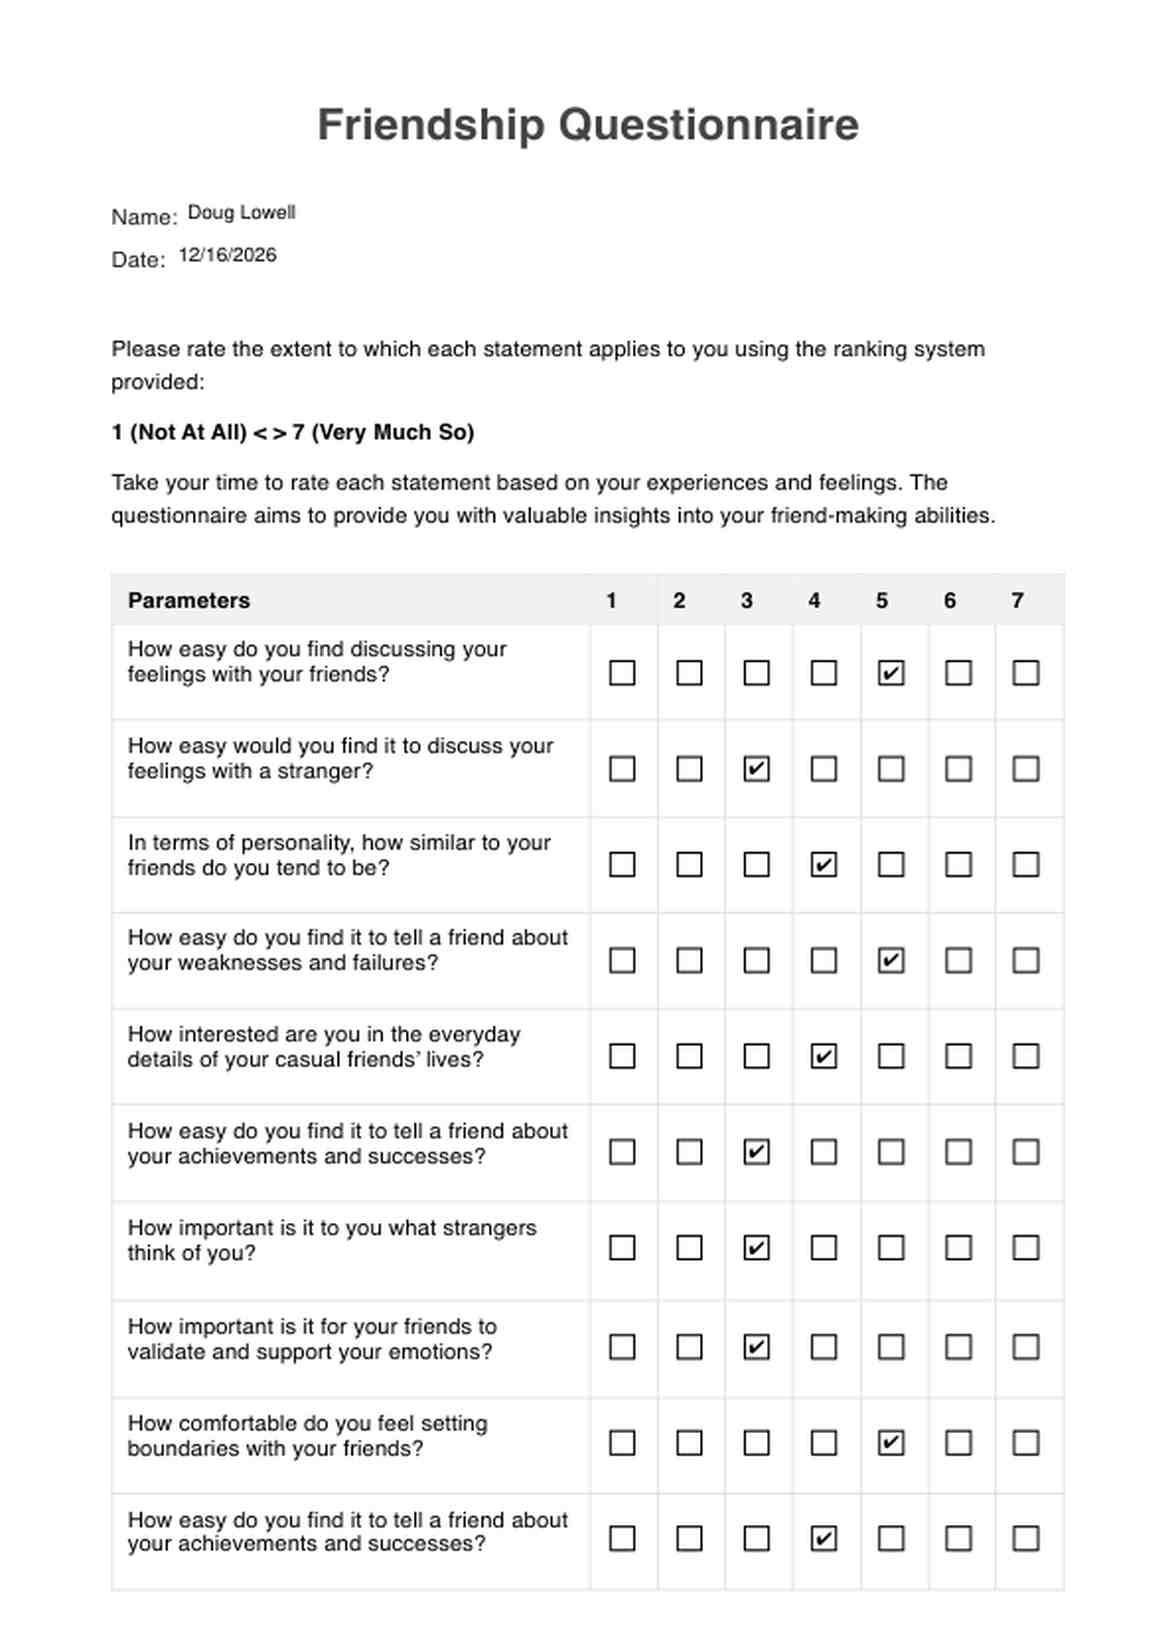 Friendship Questionnaire PDF Example